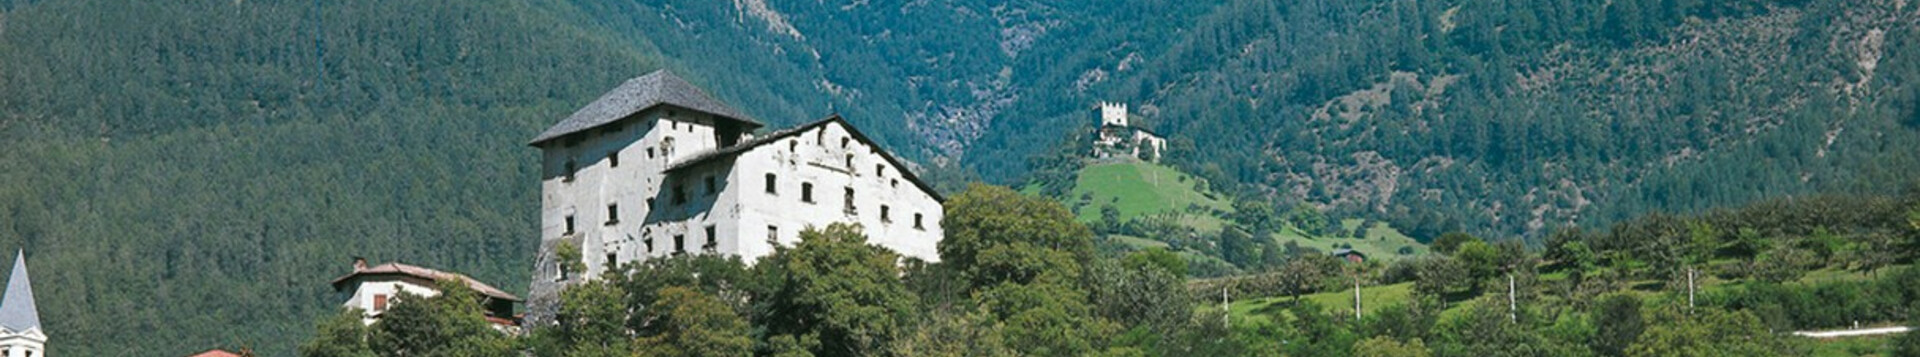 A stern Alpine castle